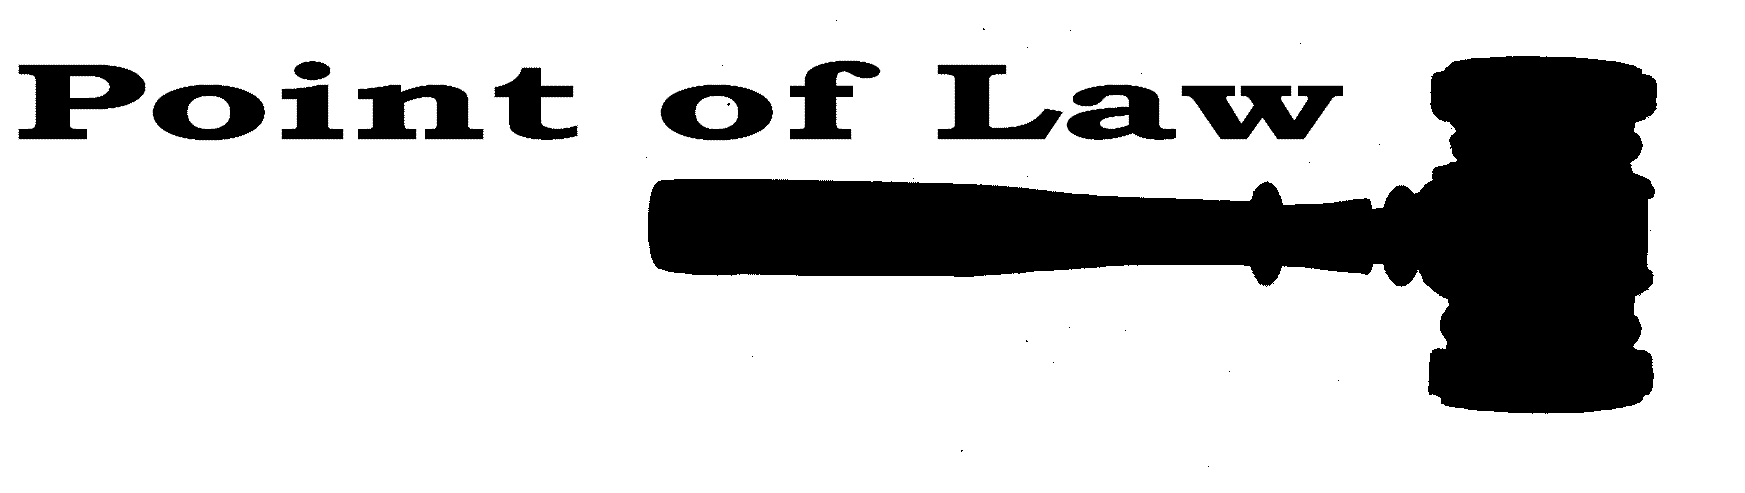 Point of law logo.gif (10948 bytes)